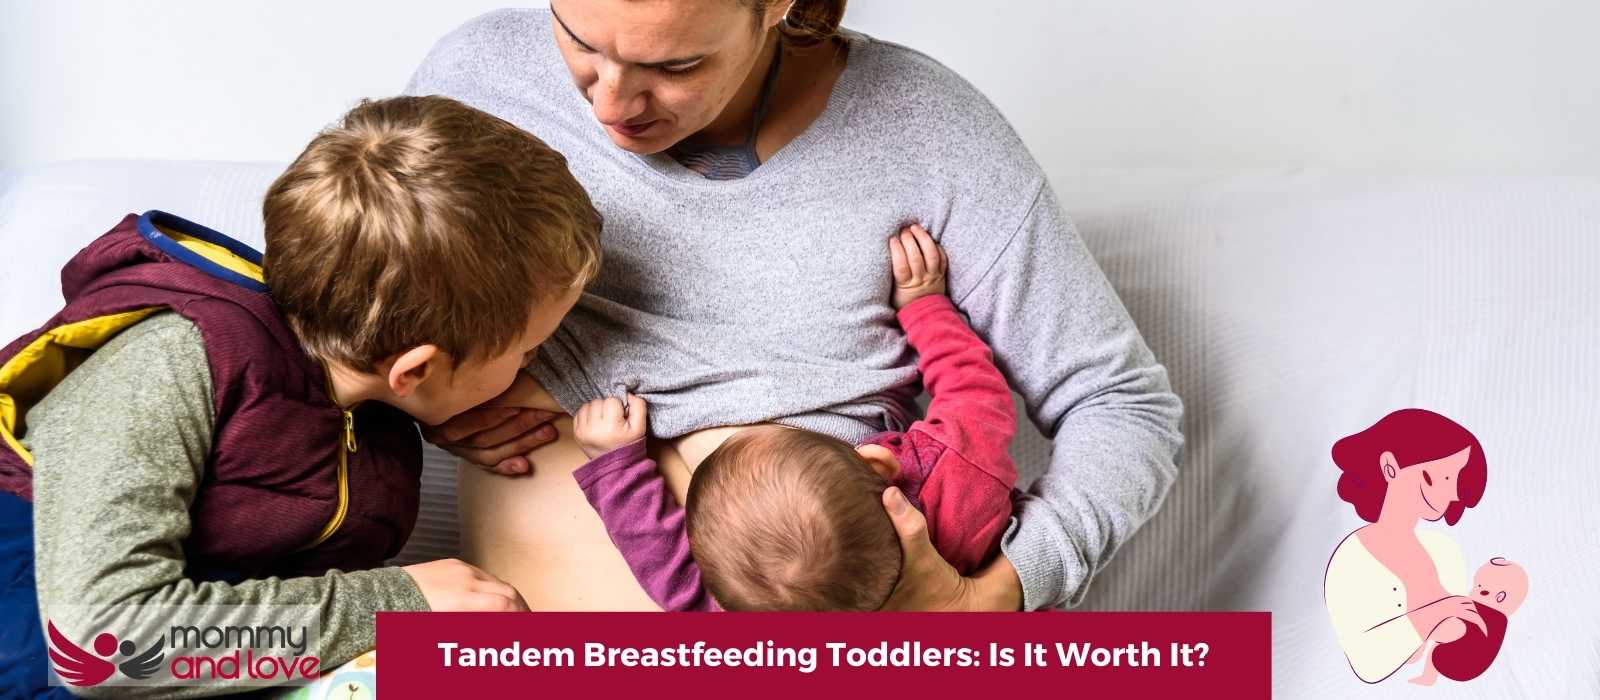 Tandem Breastfeeding Toddlers Is It Worth It